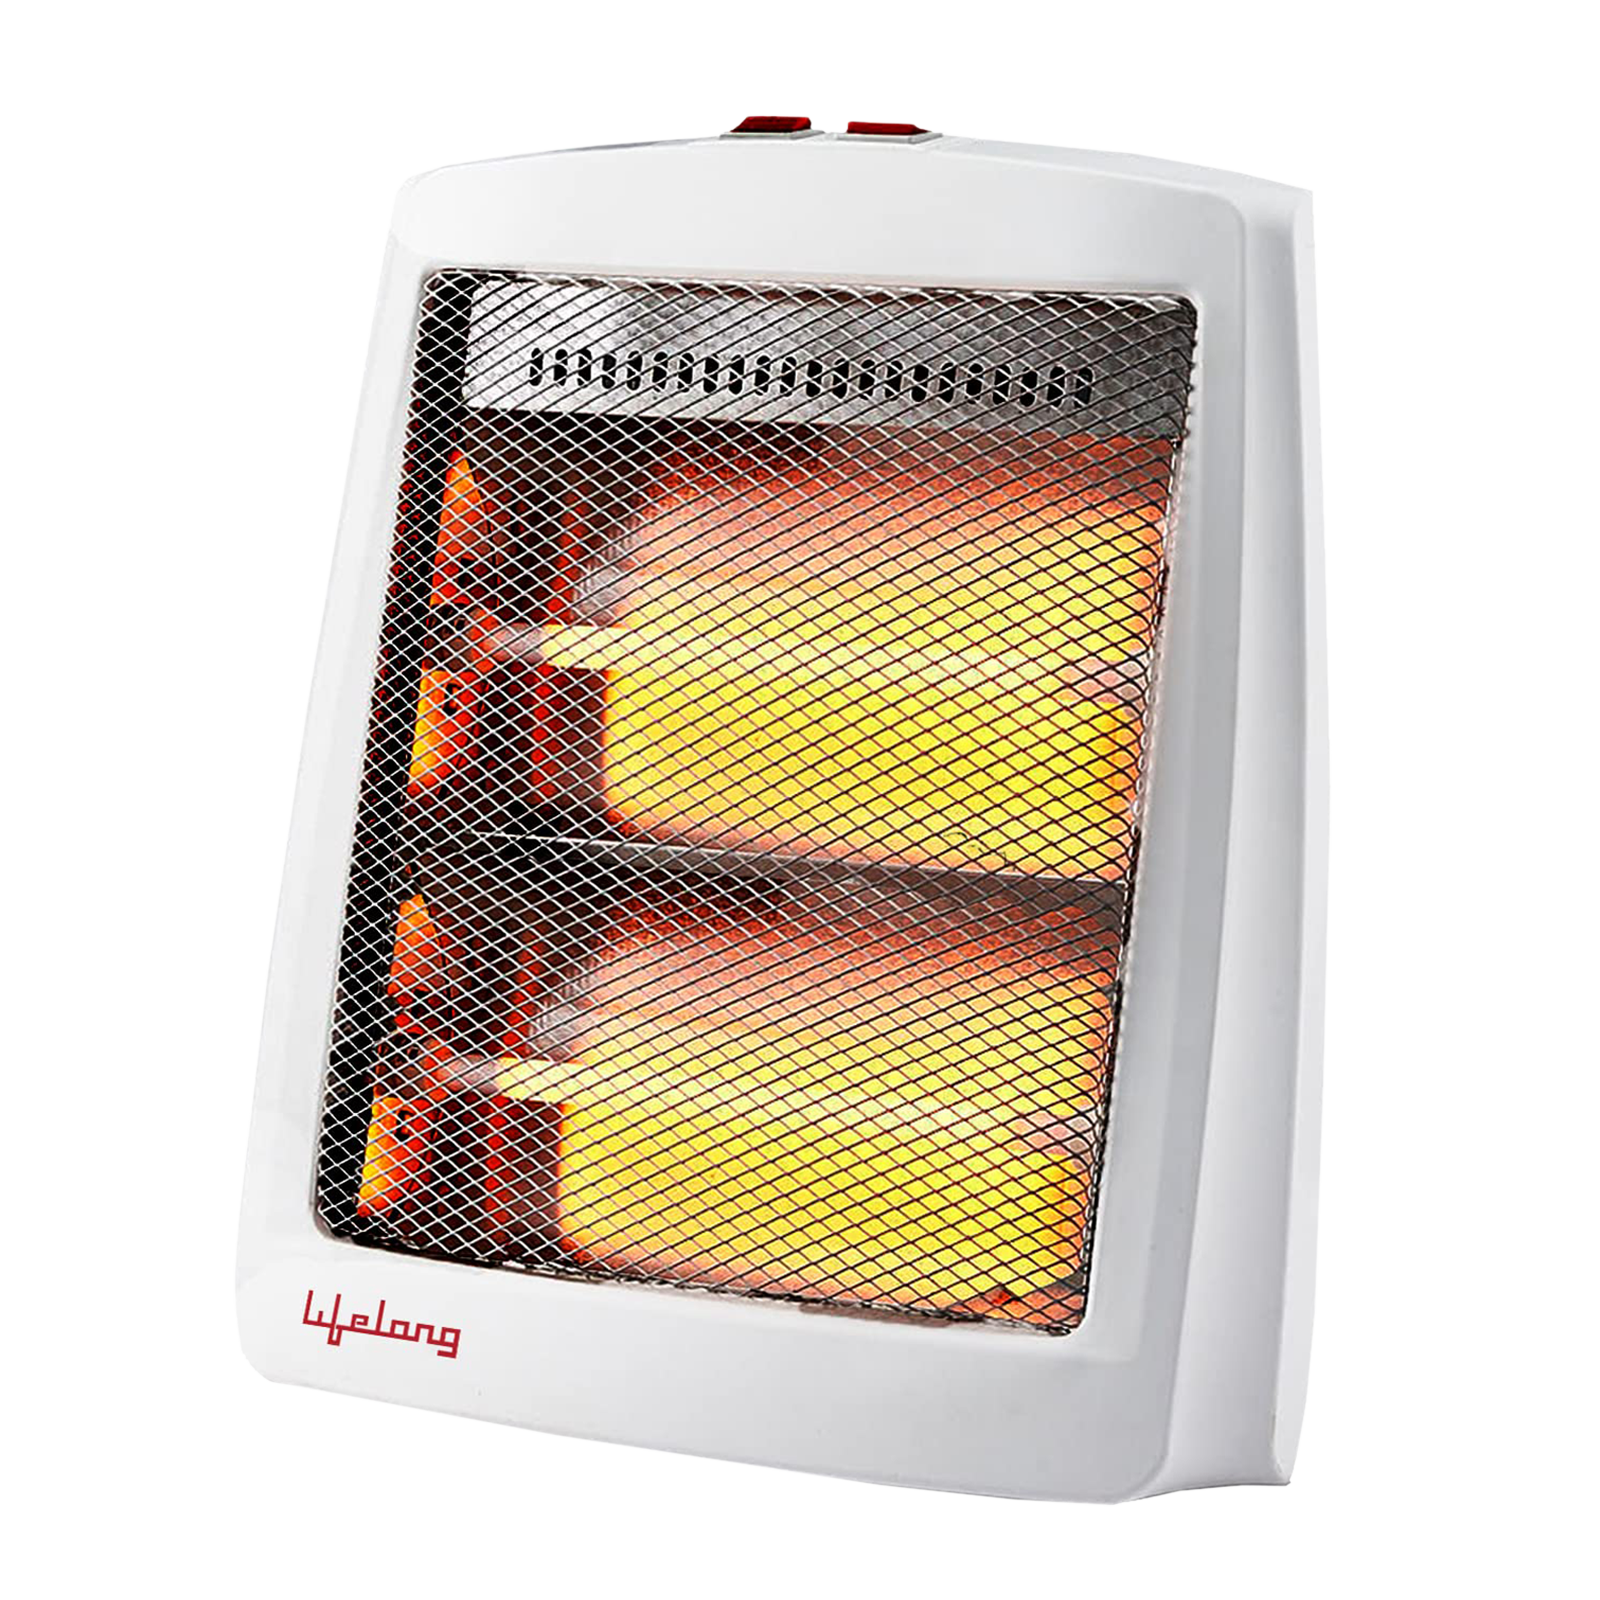 Lifelong Infinia 800 Watts Quartz Room Heater (Over Heat Protection, LLQH923, White)